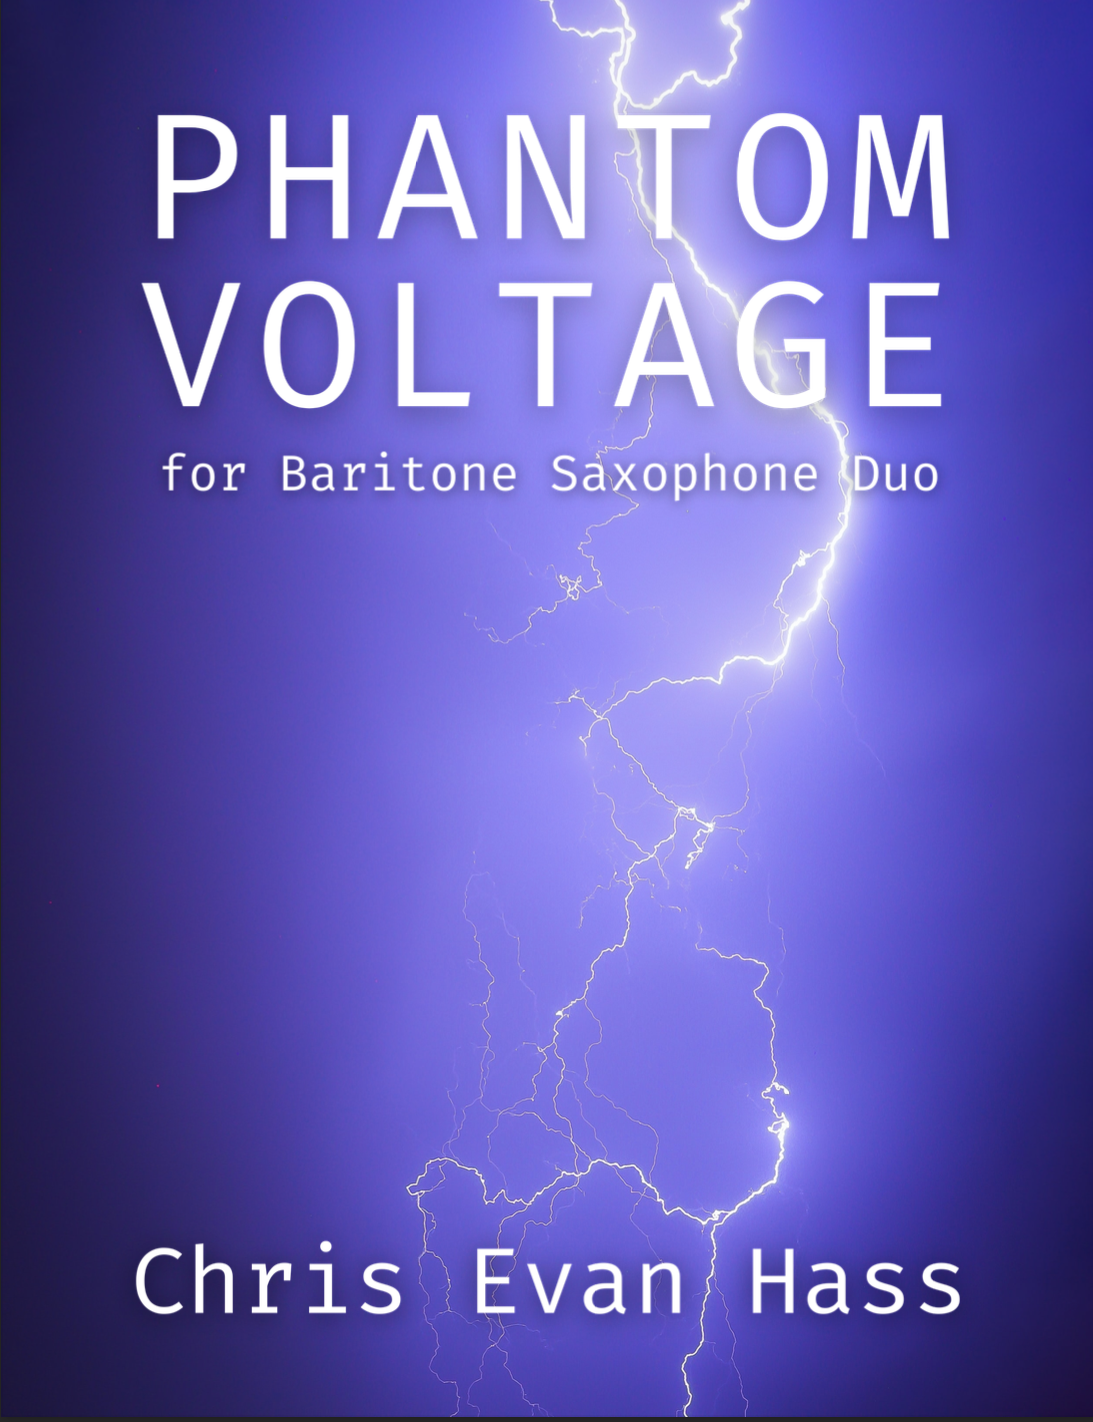 Phantom Voltage by Chris Evan Hass